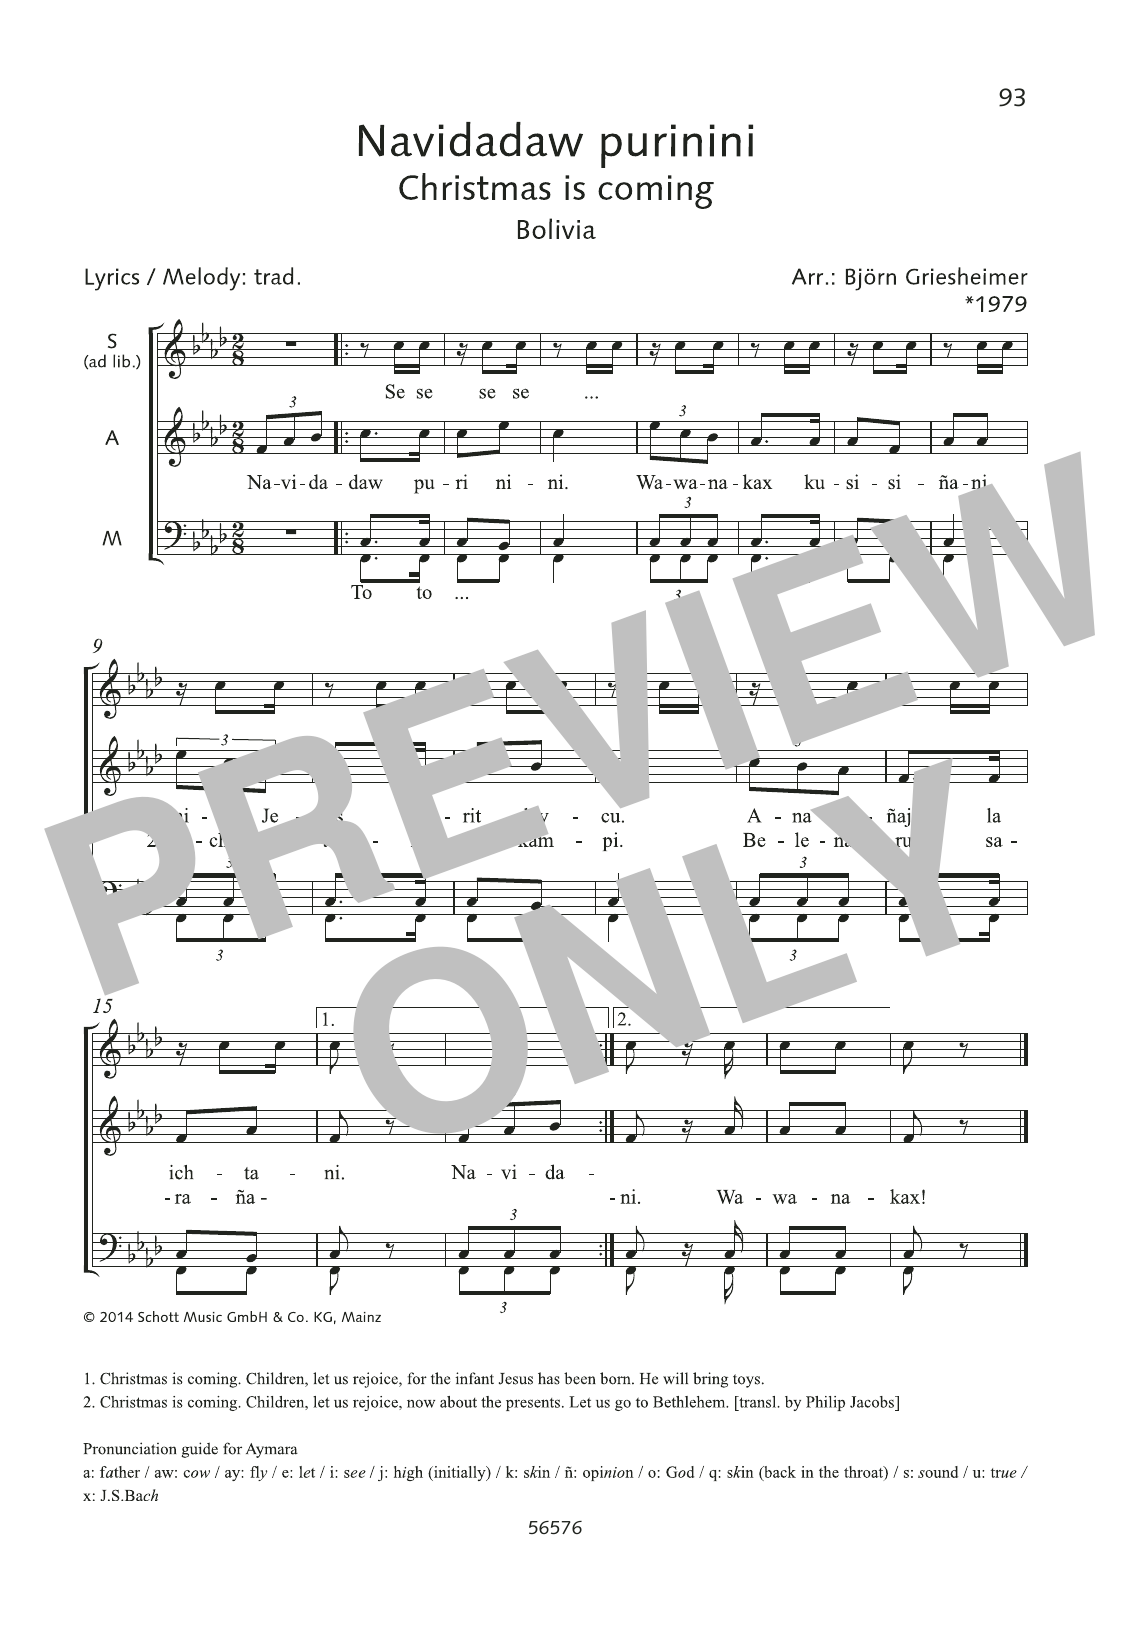 Download Björn Griesheimer Navidadaw purinini Sheet Music and learn how to play Choir PDF digital score in minutes